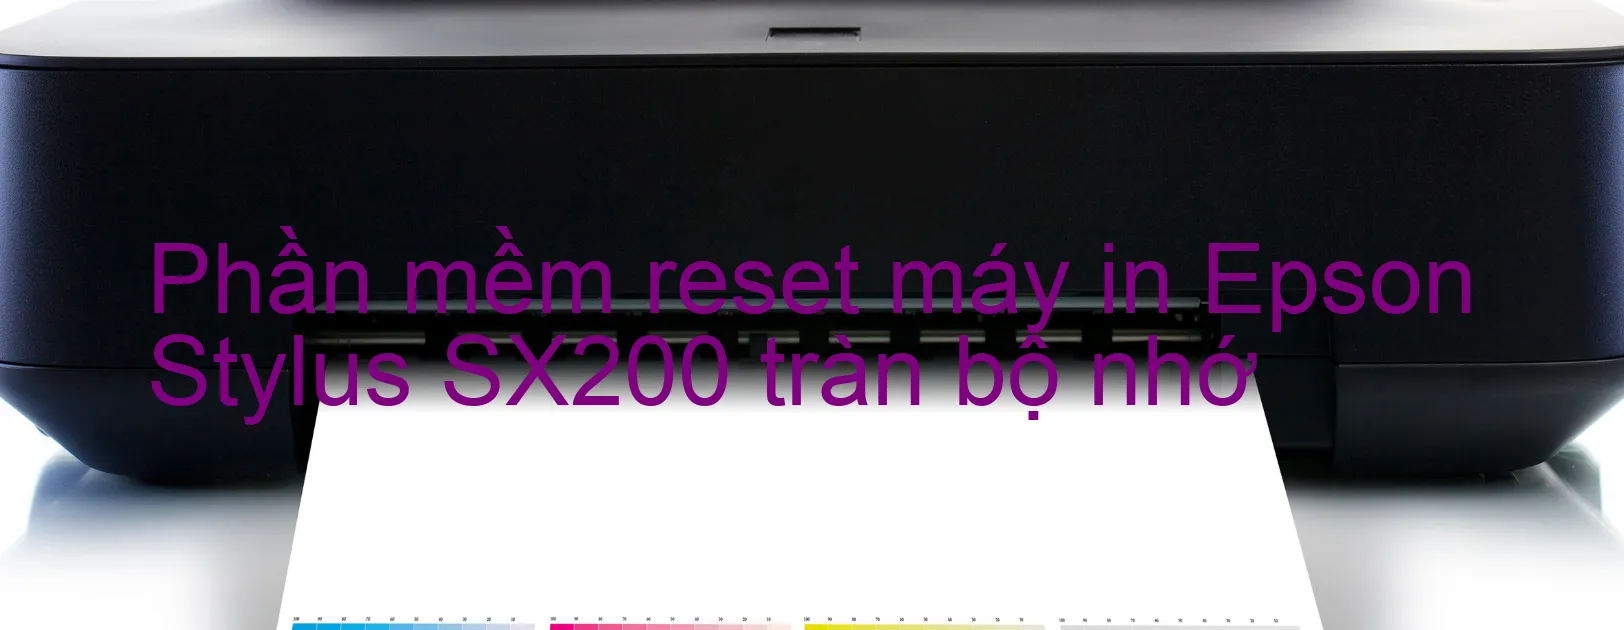 phan-mem-reset-may-in-epson-stylus-sx200-tran-bo-nho.webp